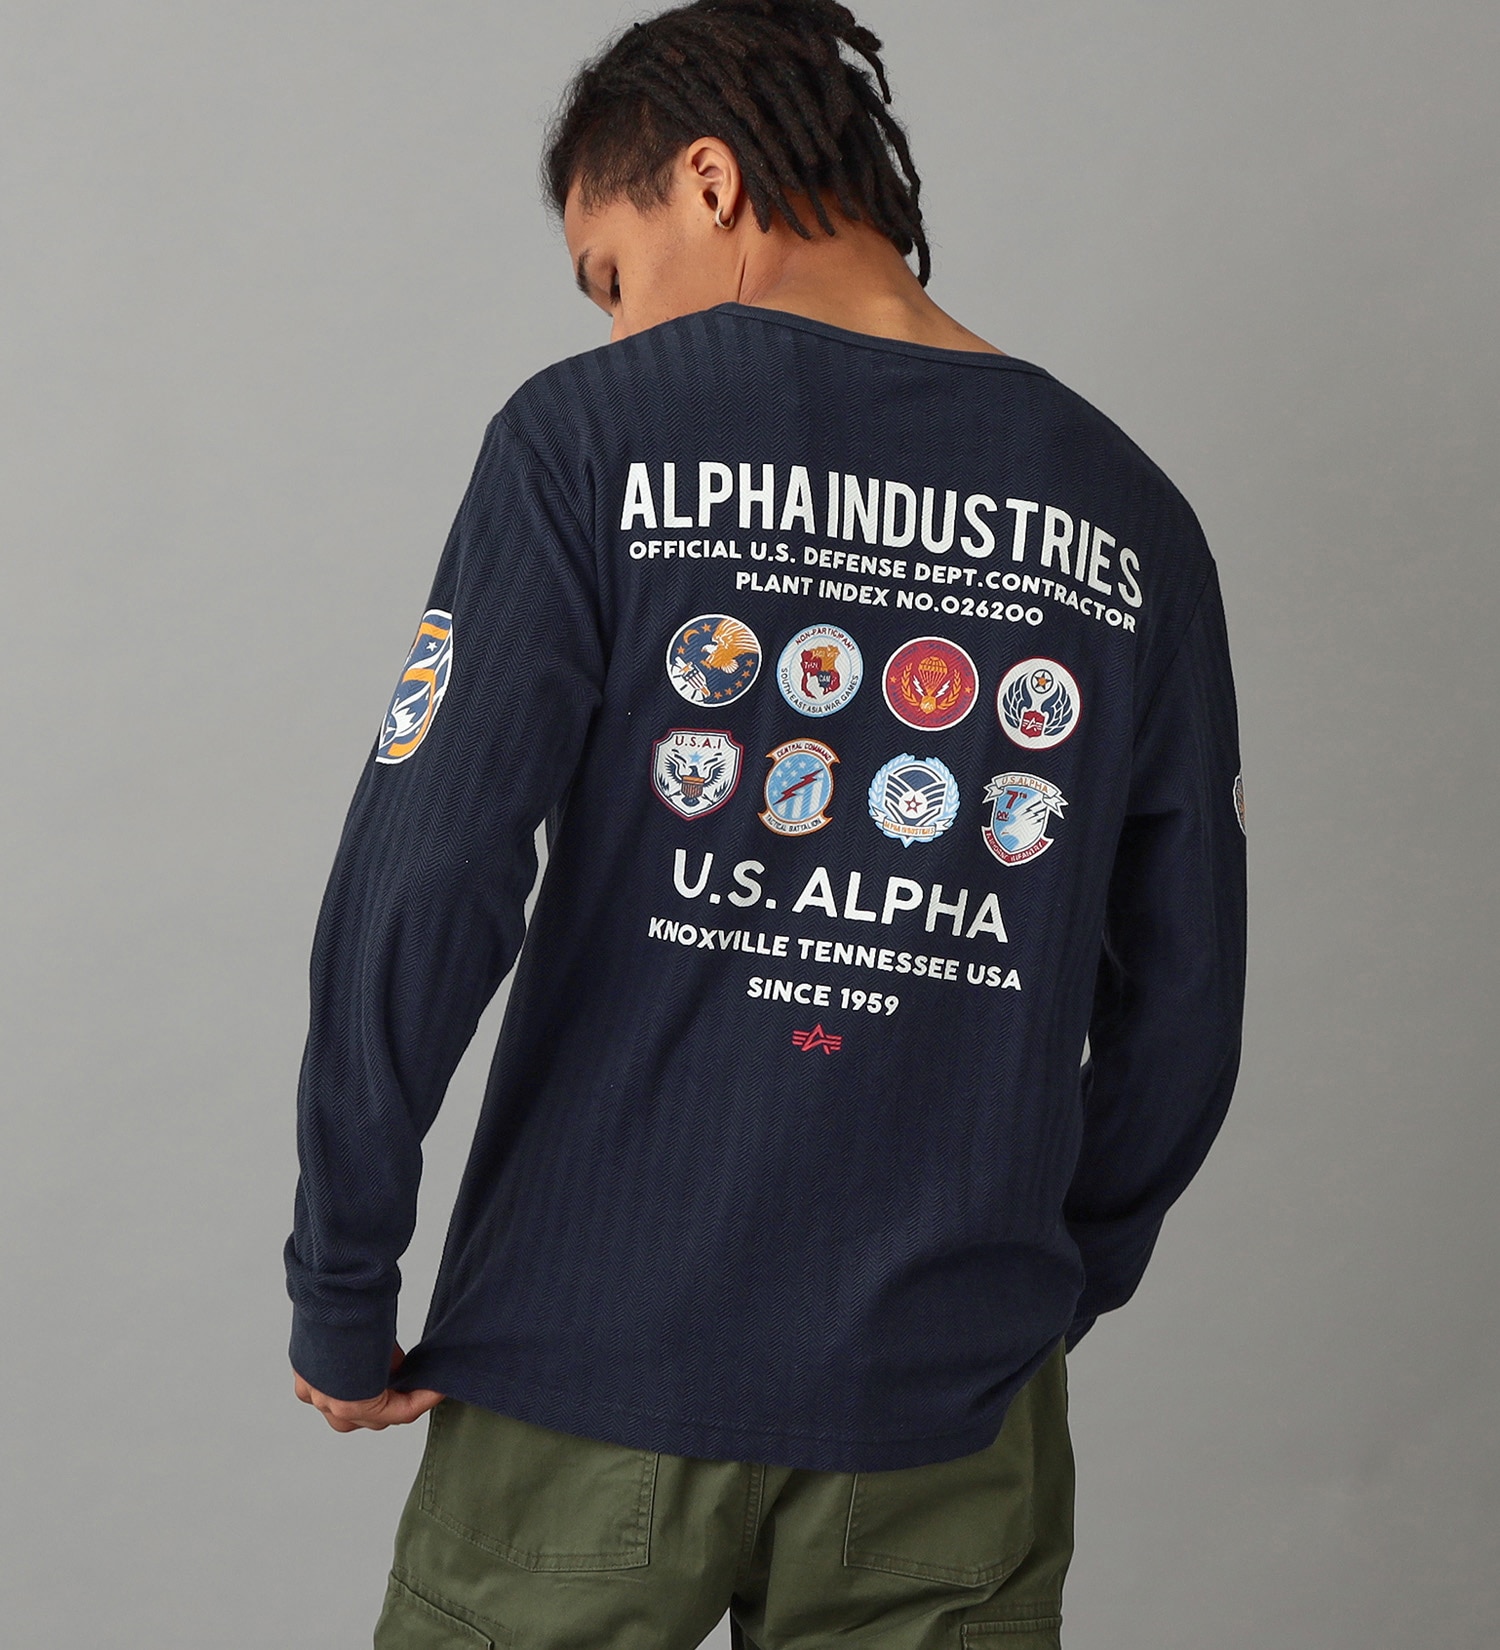 ALPHA(アルファ)のヘリンボーンバックプリント長袖Tシャツ|トップス/Tシャツ/カットソー/メンズ|ネイビー